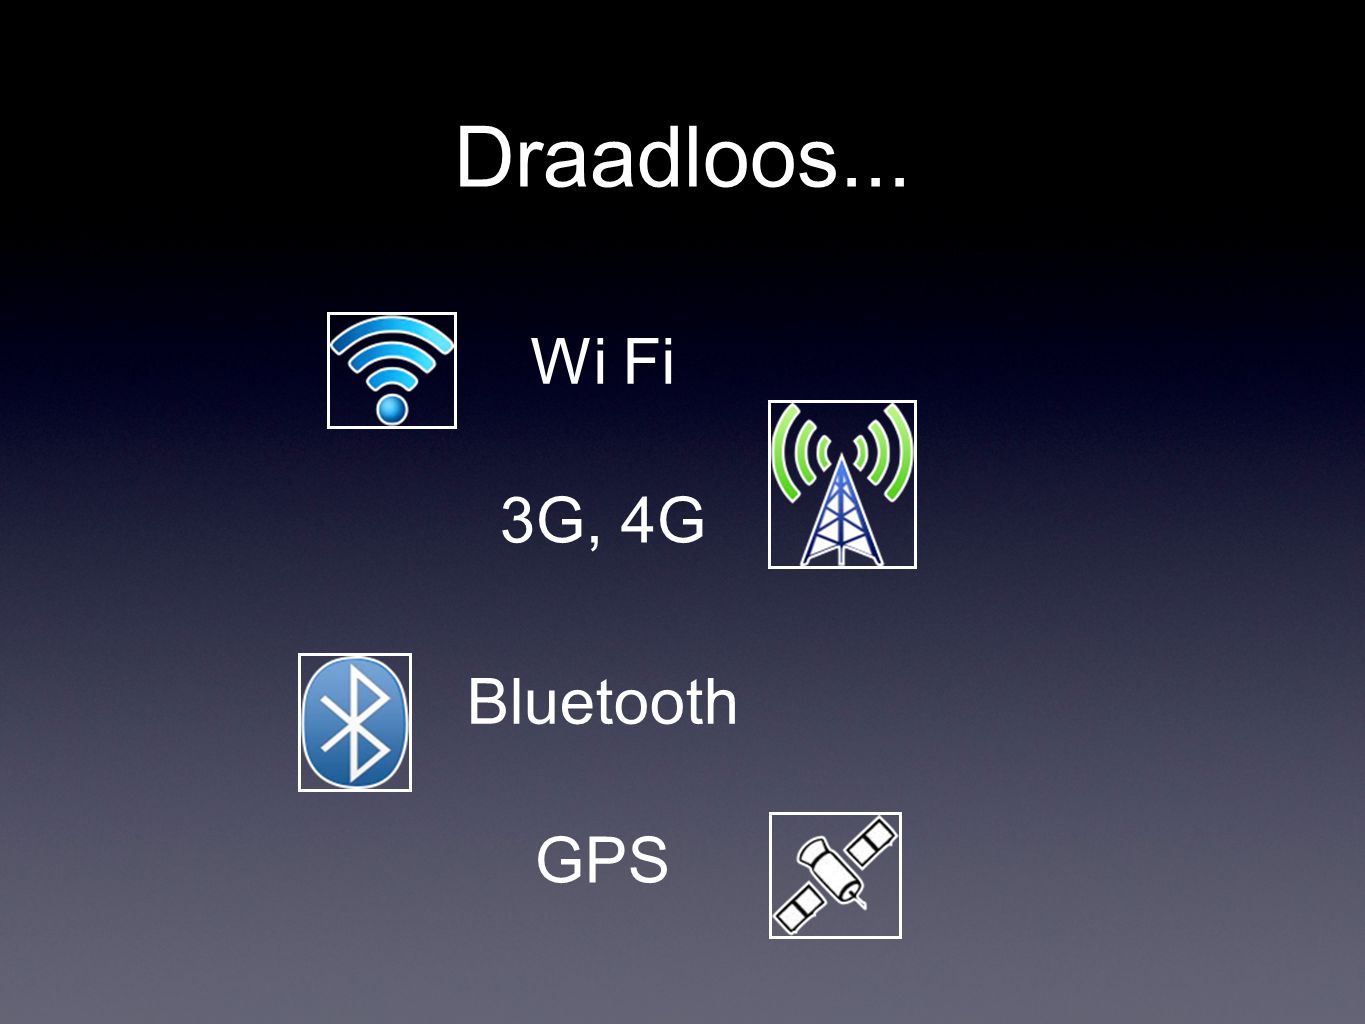 Draadloos... Wi Fi 3G, 4G Bluetooth GPS